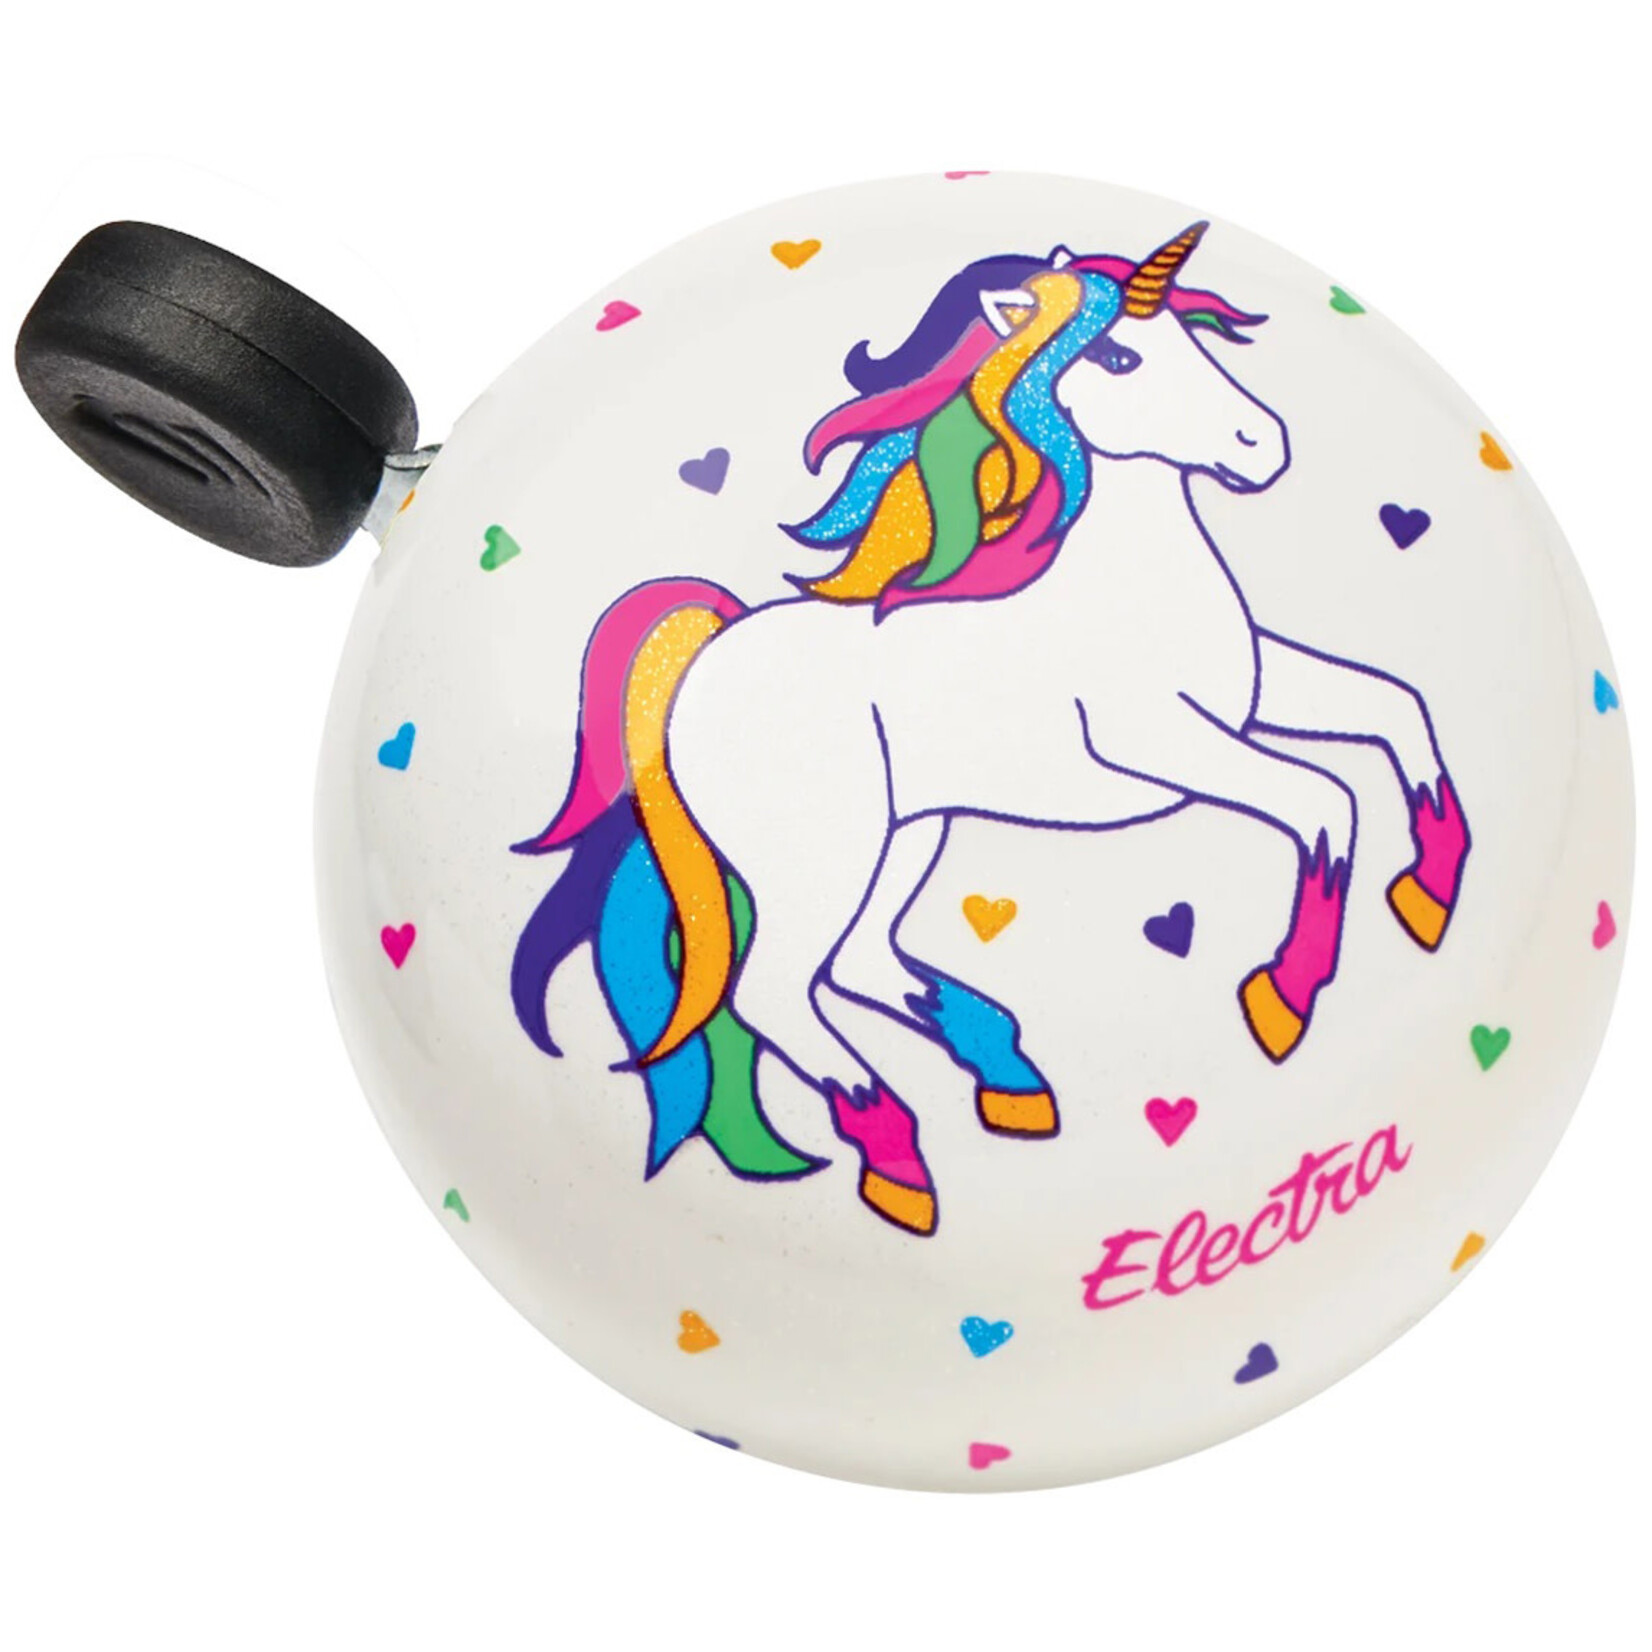 ELECTRA Electra Unicorn Domed Ringer Bike Bell